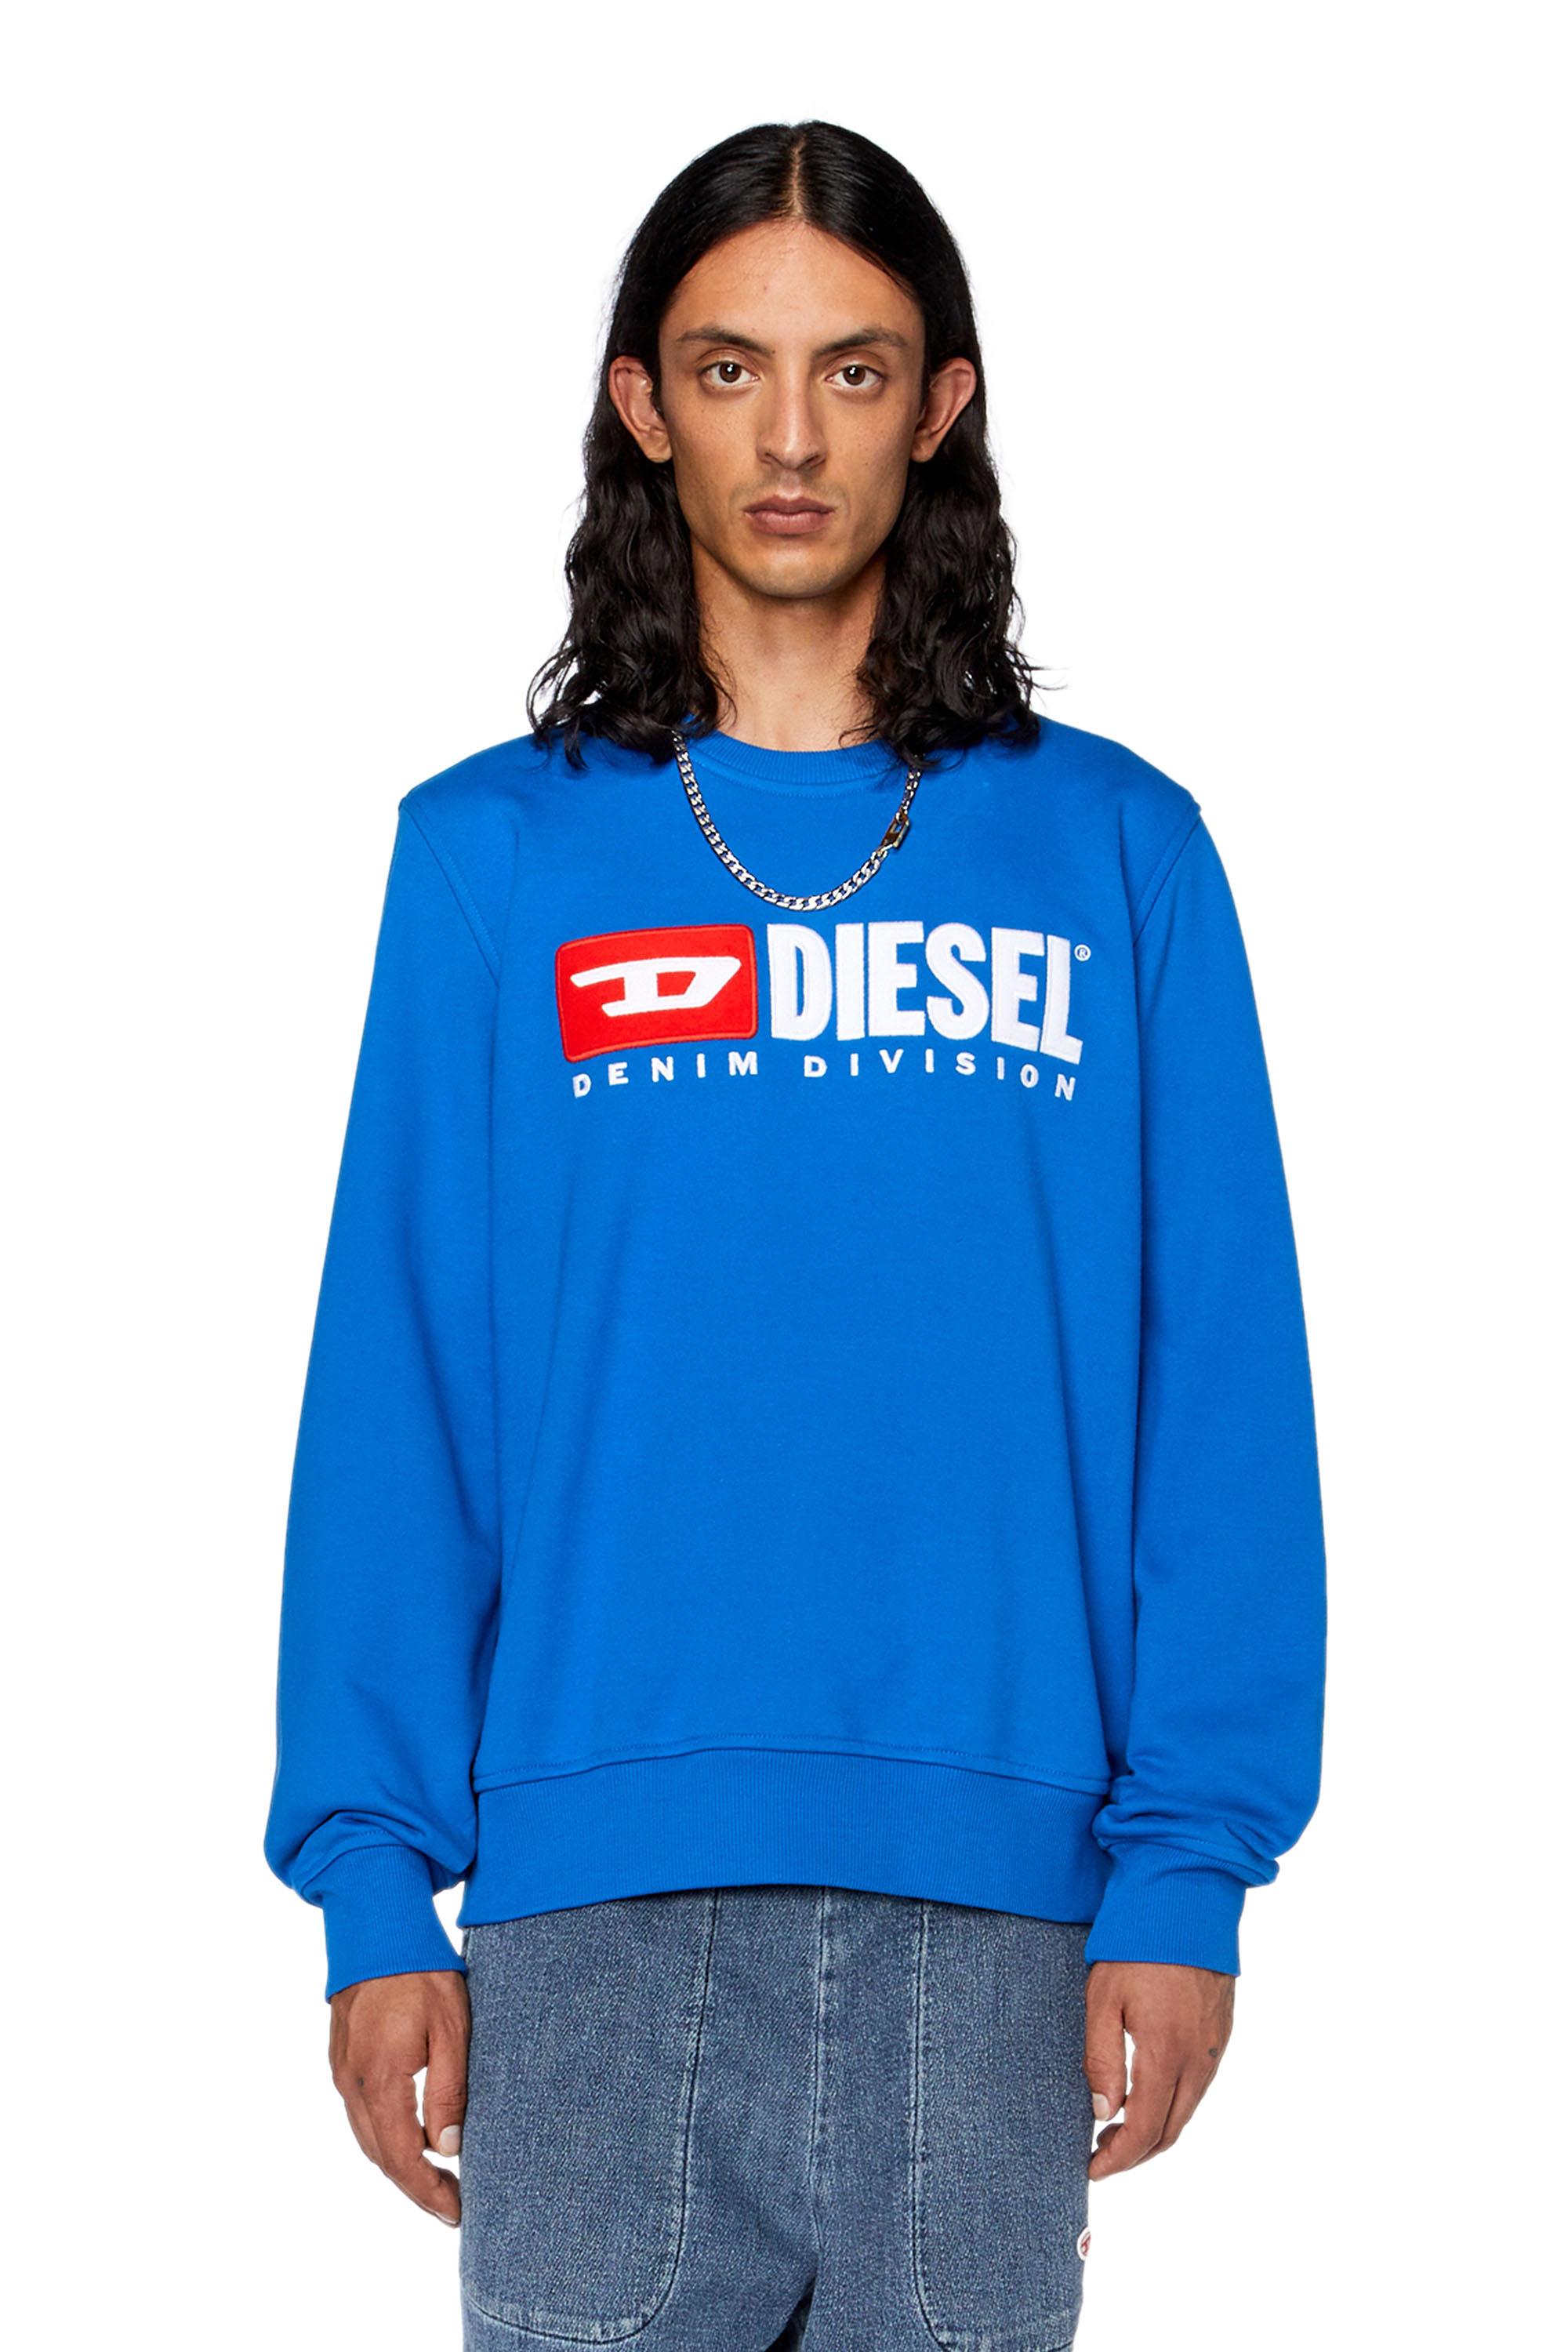 Diesel - S-GINN-DIV, Azul - Image 1